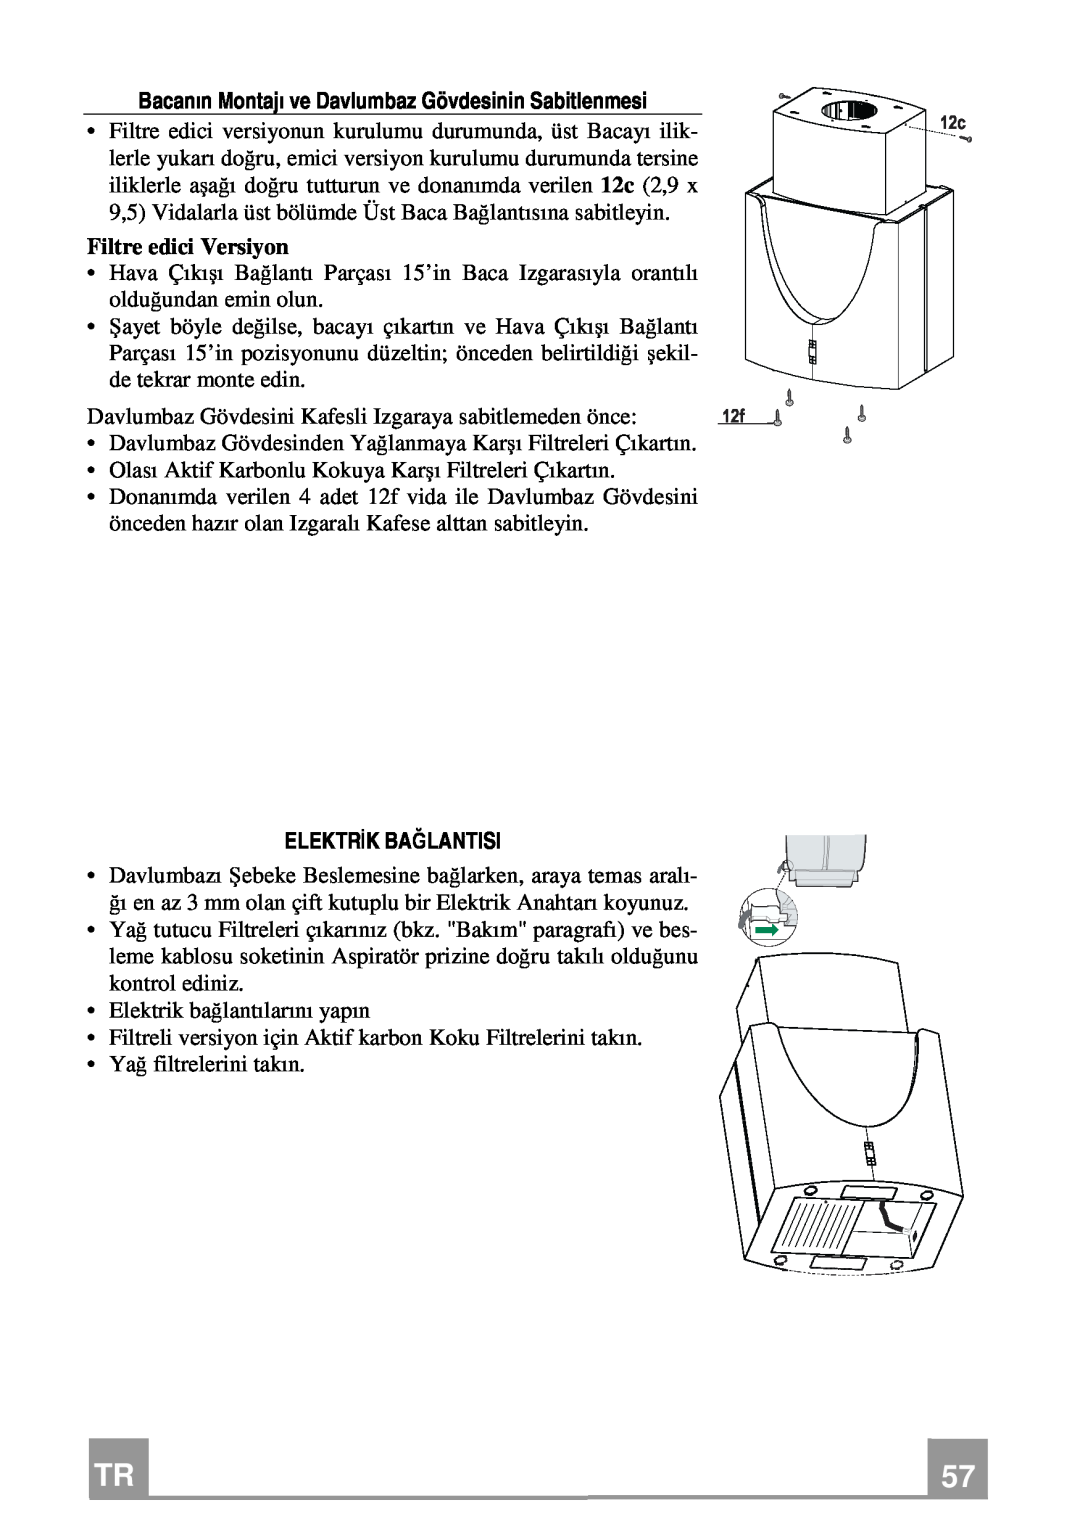 Franke Consumer Products FDMO 607 I manual Filtre edici Versiyon, Elektrik Bağlantisi 